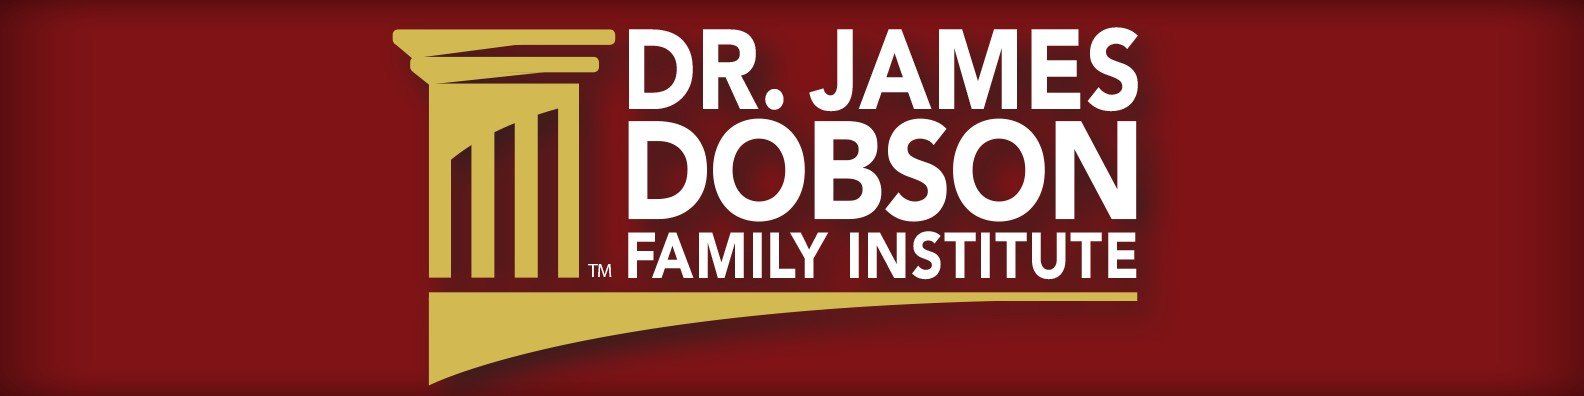 Dr. James Dobson Family Institute